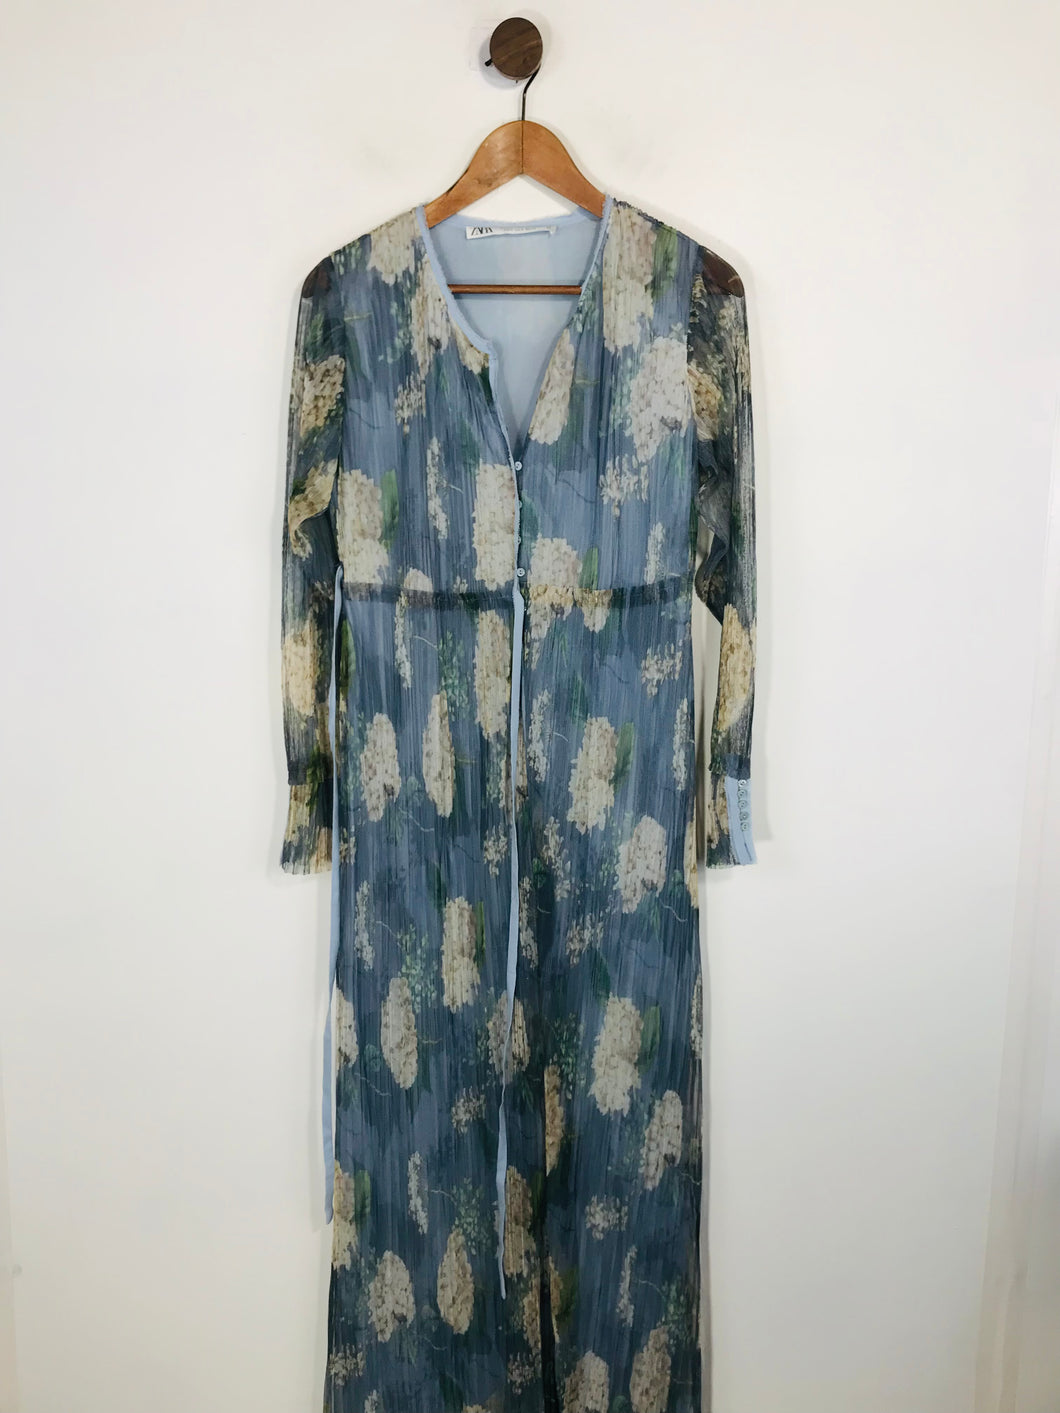 Zara Women's Floral Sheer Maxi Dress | M UK10-12 | Multicoloured